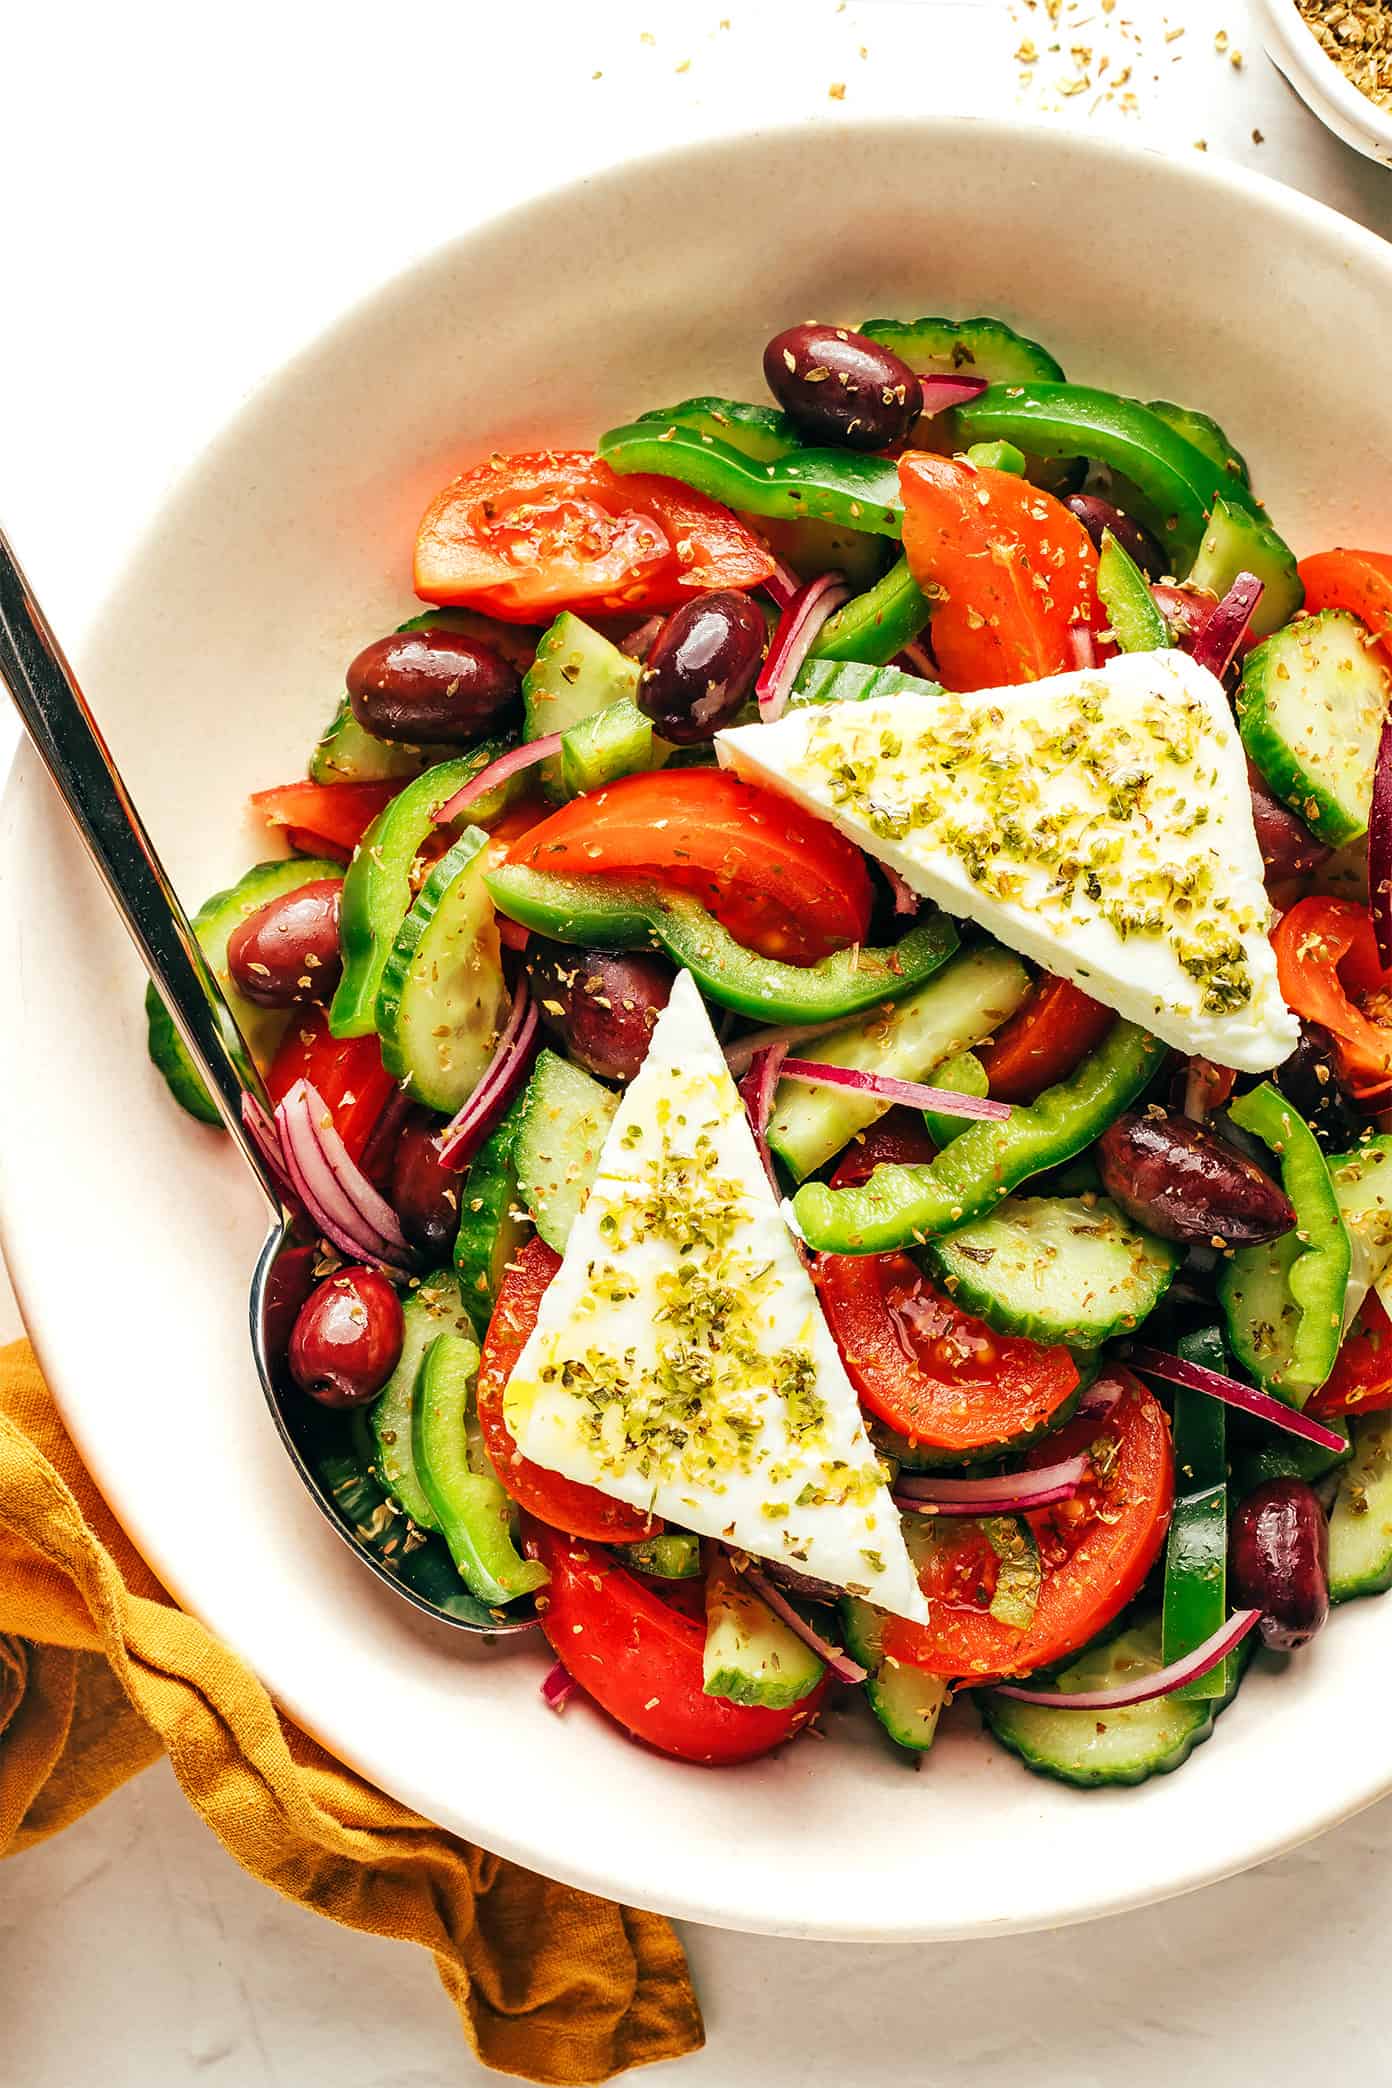 https://www.gimmesomeoven.com/wp-content/uploads/2018/06/Greek-Salad-6.jpg